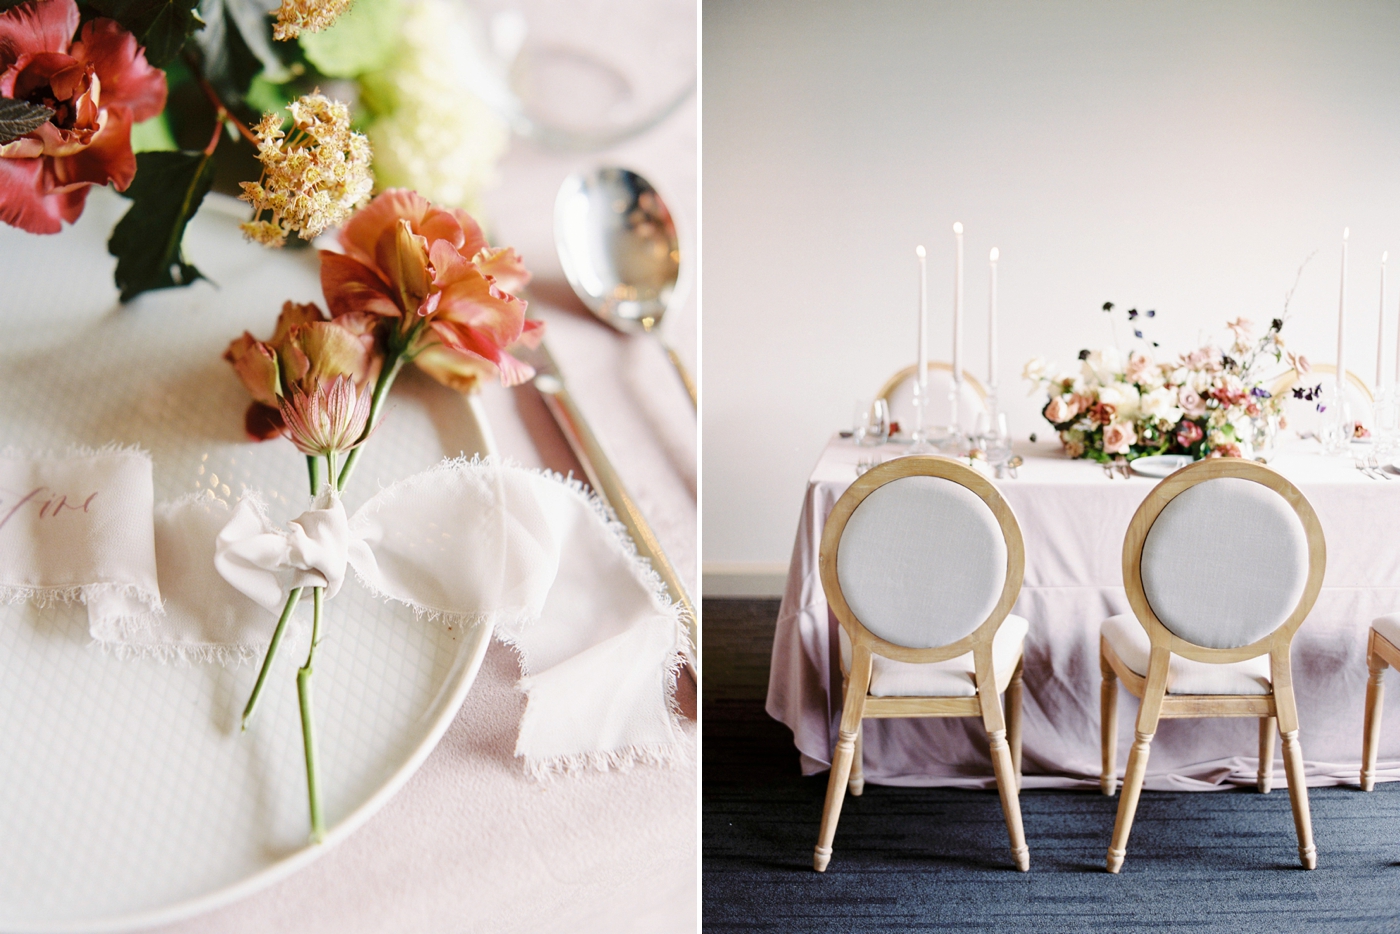 Stacey Foley Design Joy Wed Fine Art Series Photography Workshop | Banff wedding photographers | Rimrock resort wedding | table decor place setting floral centerpiece